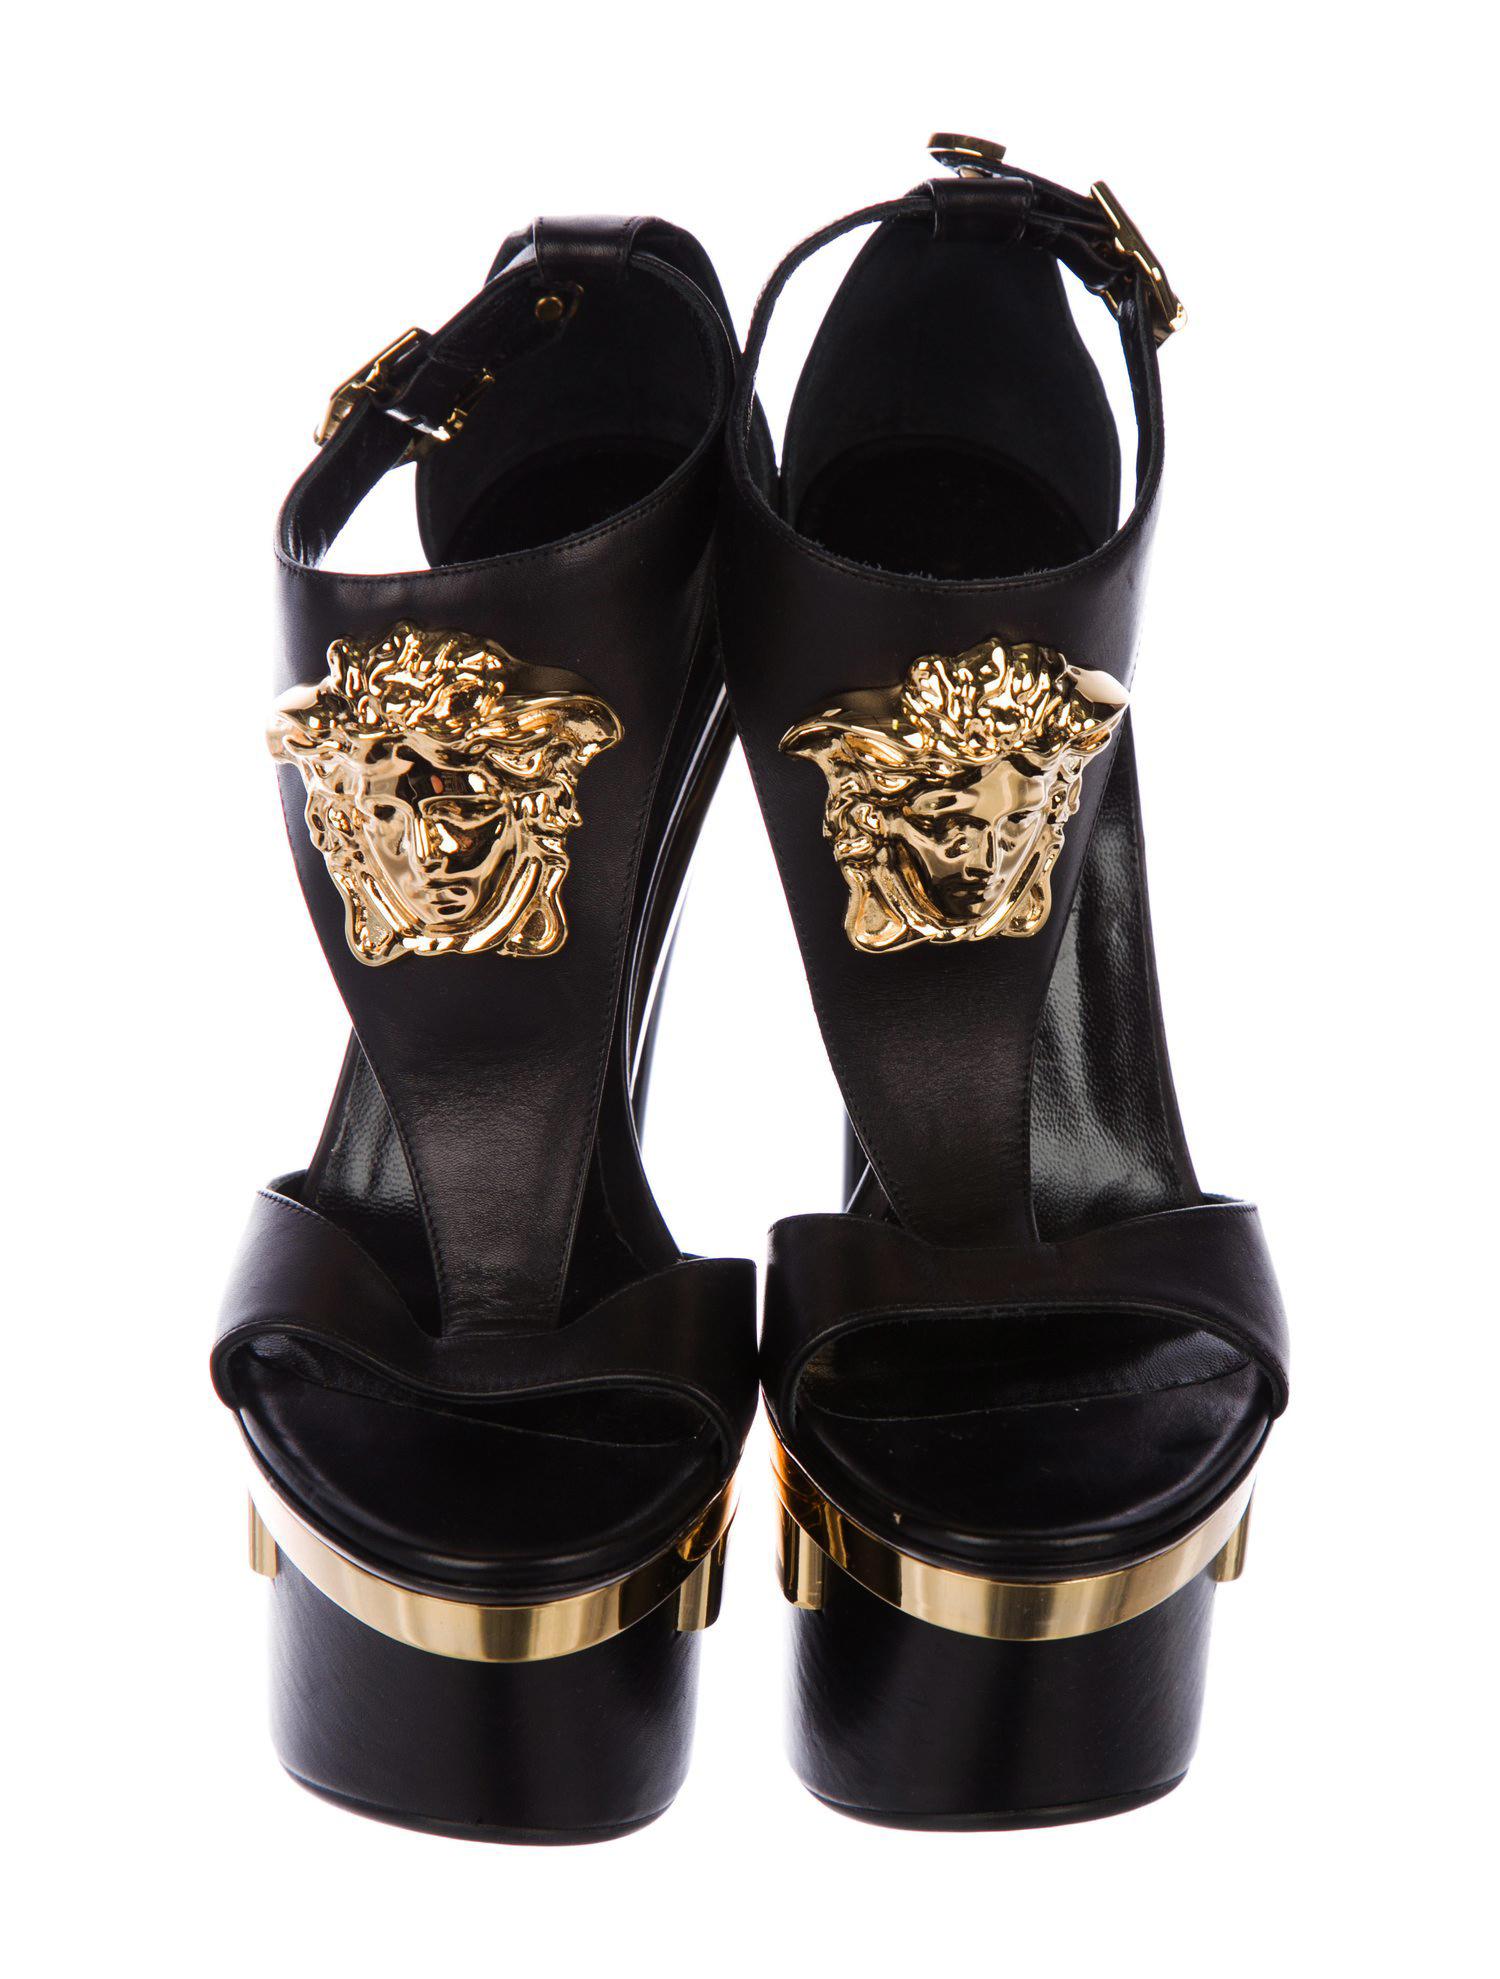 black and gold versace heels